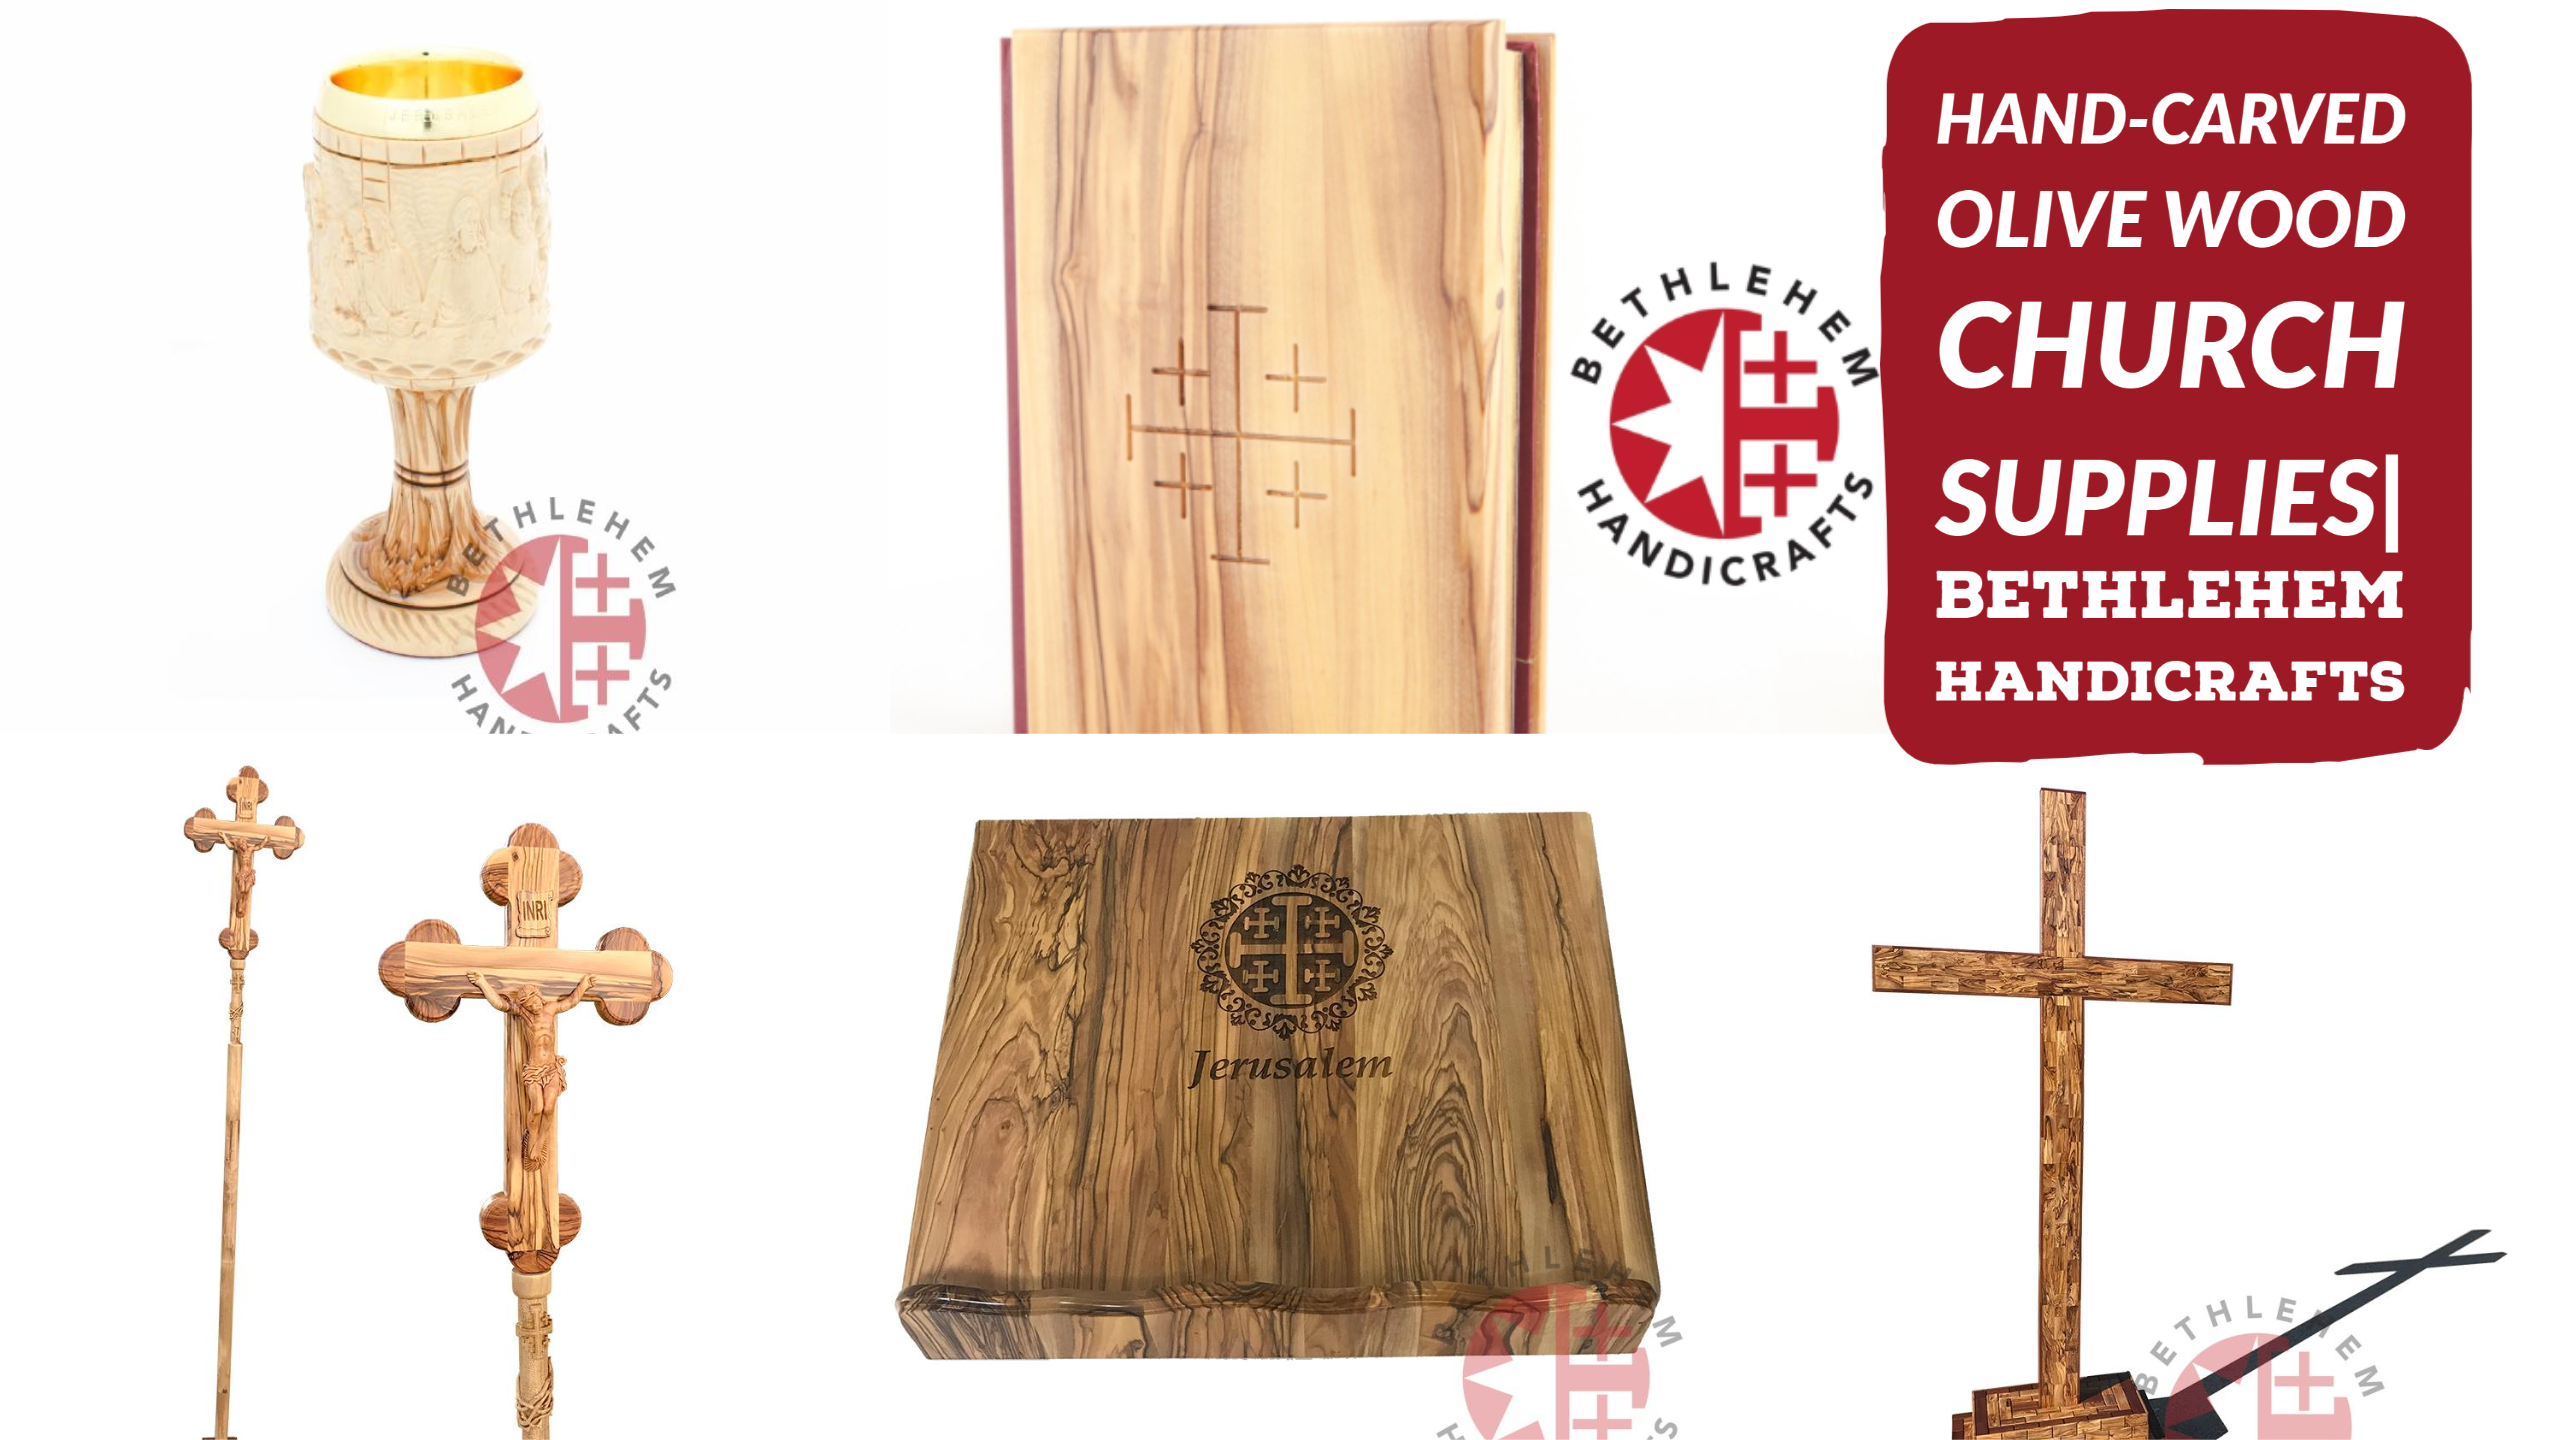 Hand-carved Olive Wood Church Supplies | Bethlehem Handicrafts